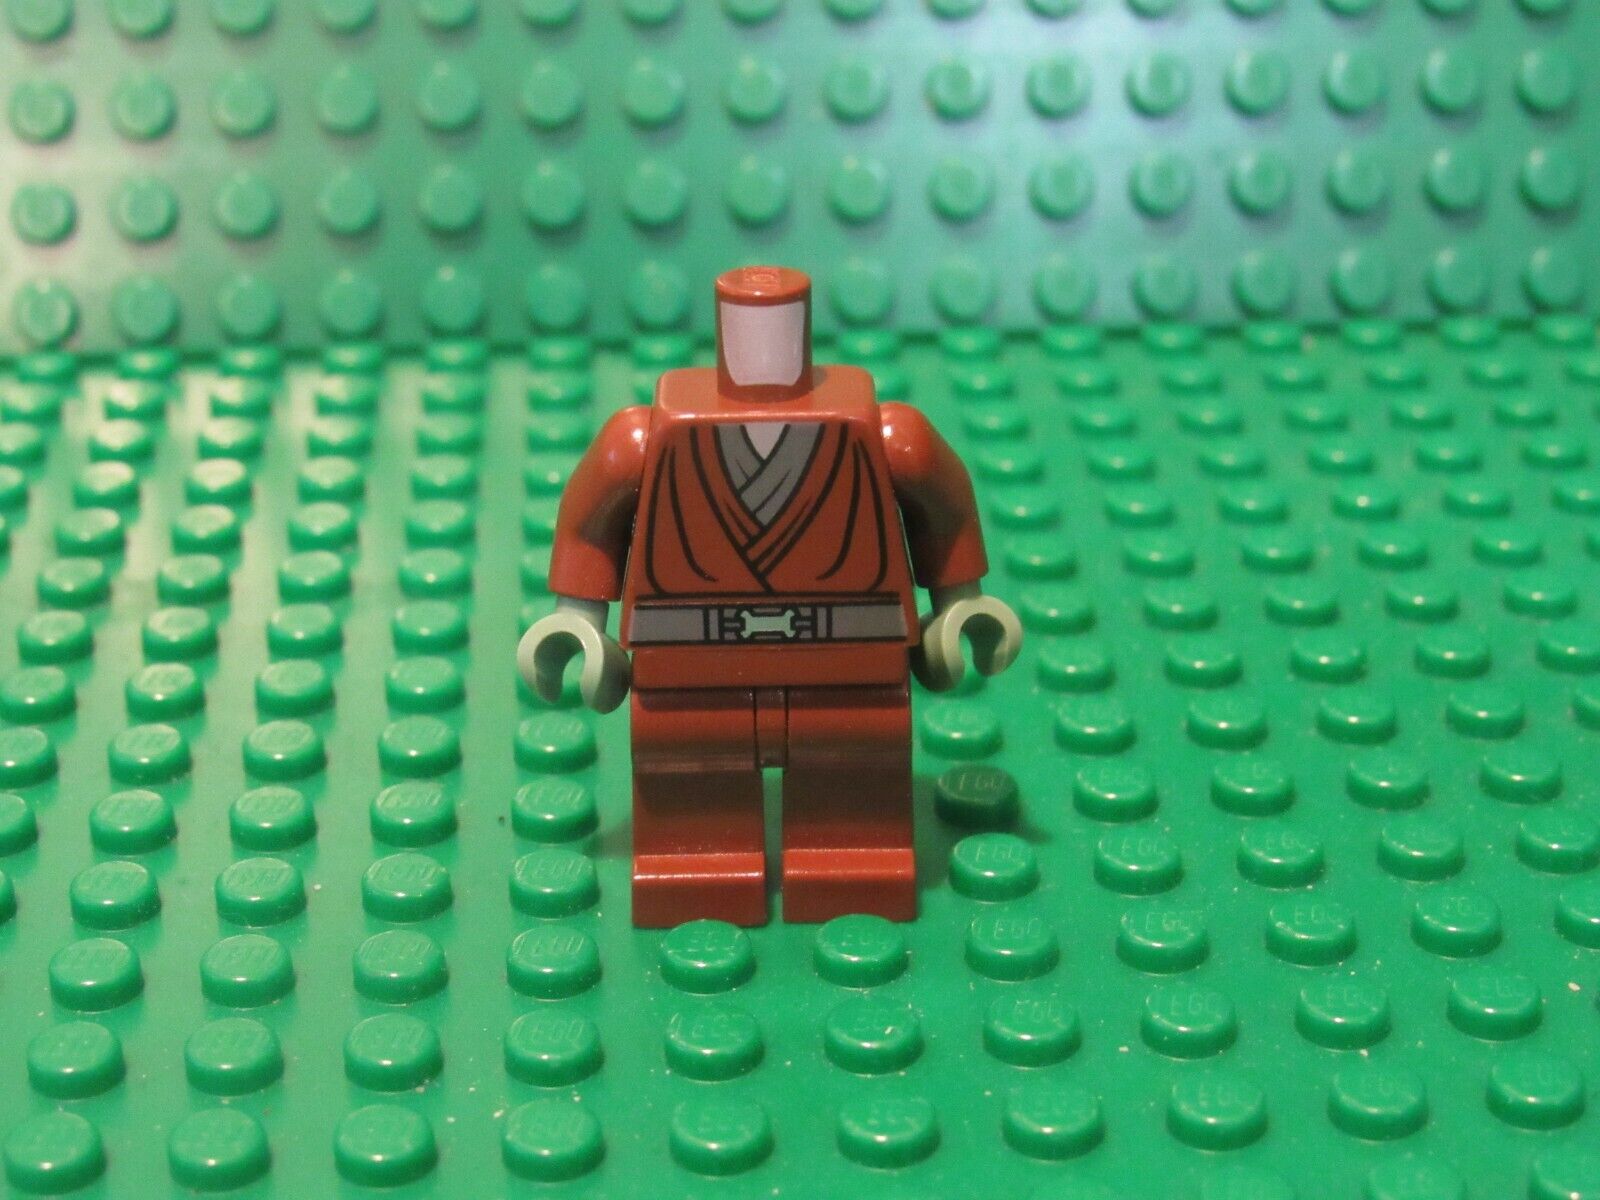 LEGO Star Wars Kit Fisto Authentic Minifigure torso legs 9526 KF26